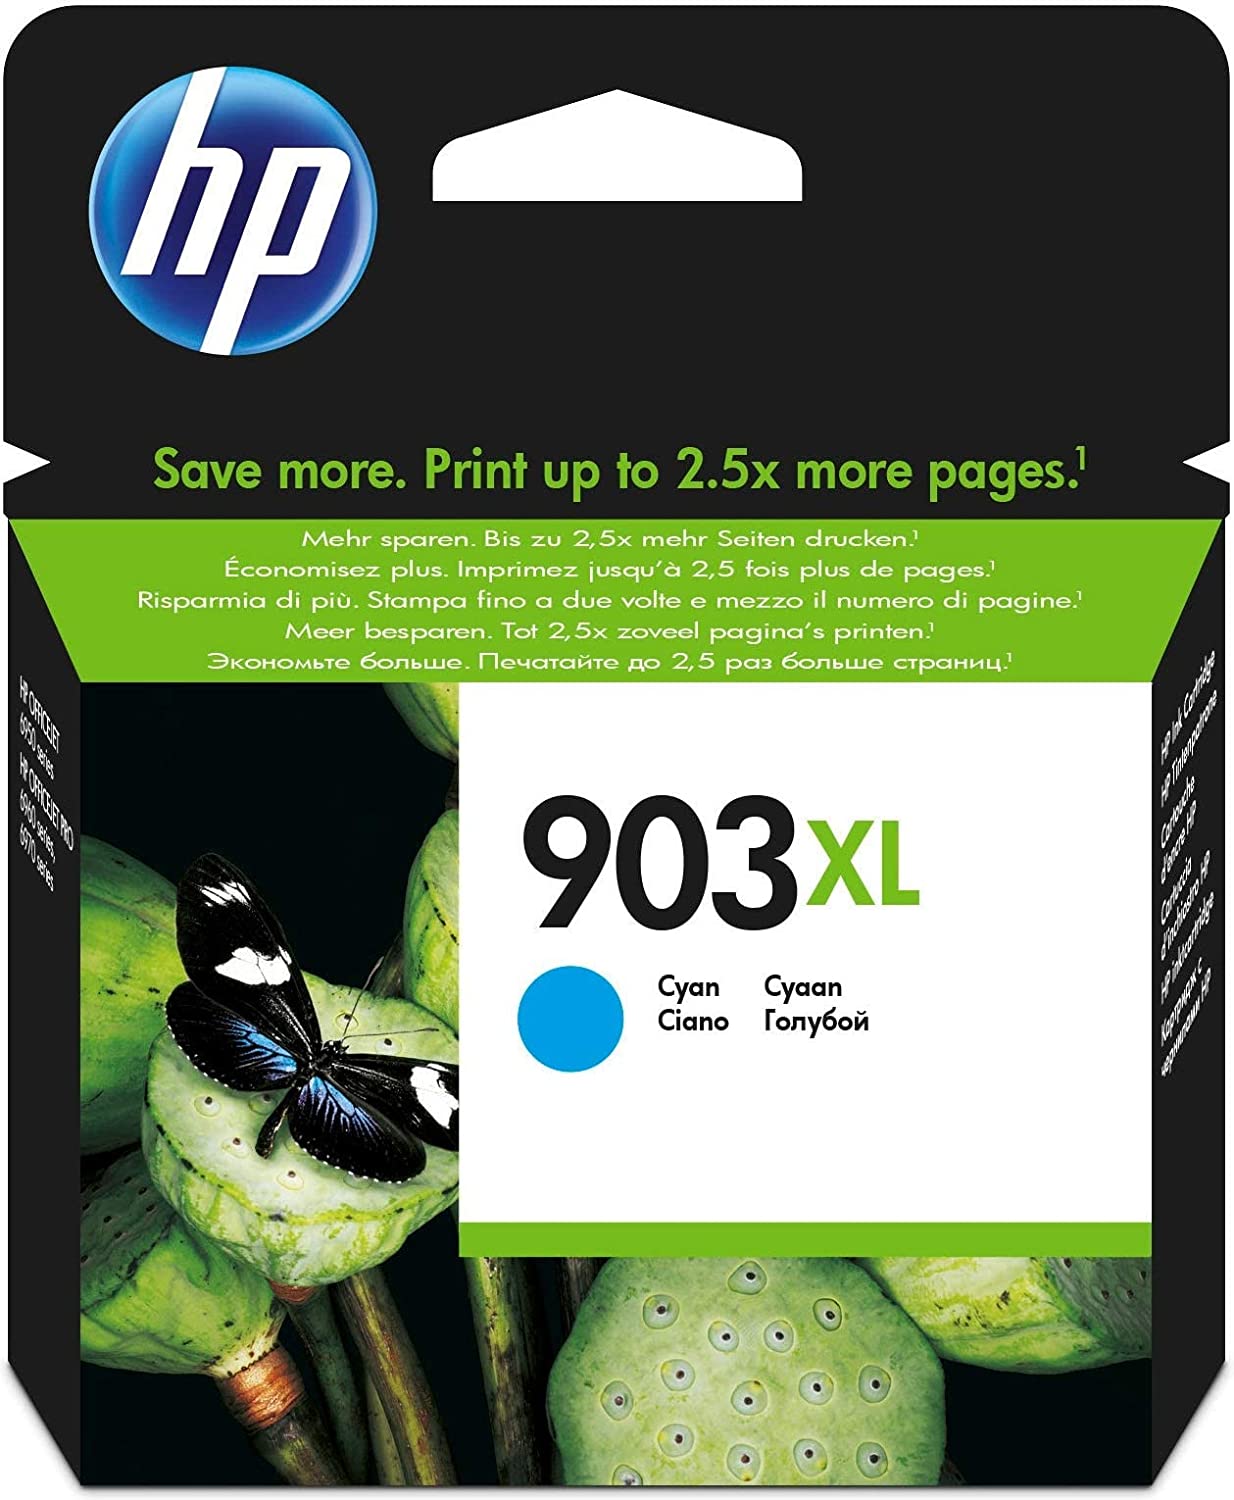 HP 903XL Inkjet Cartridge Cyan T6M03AE